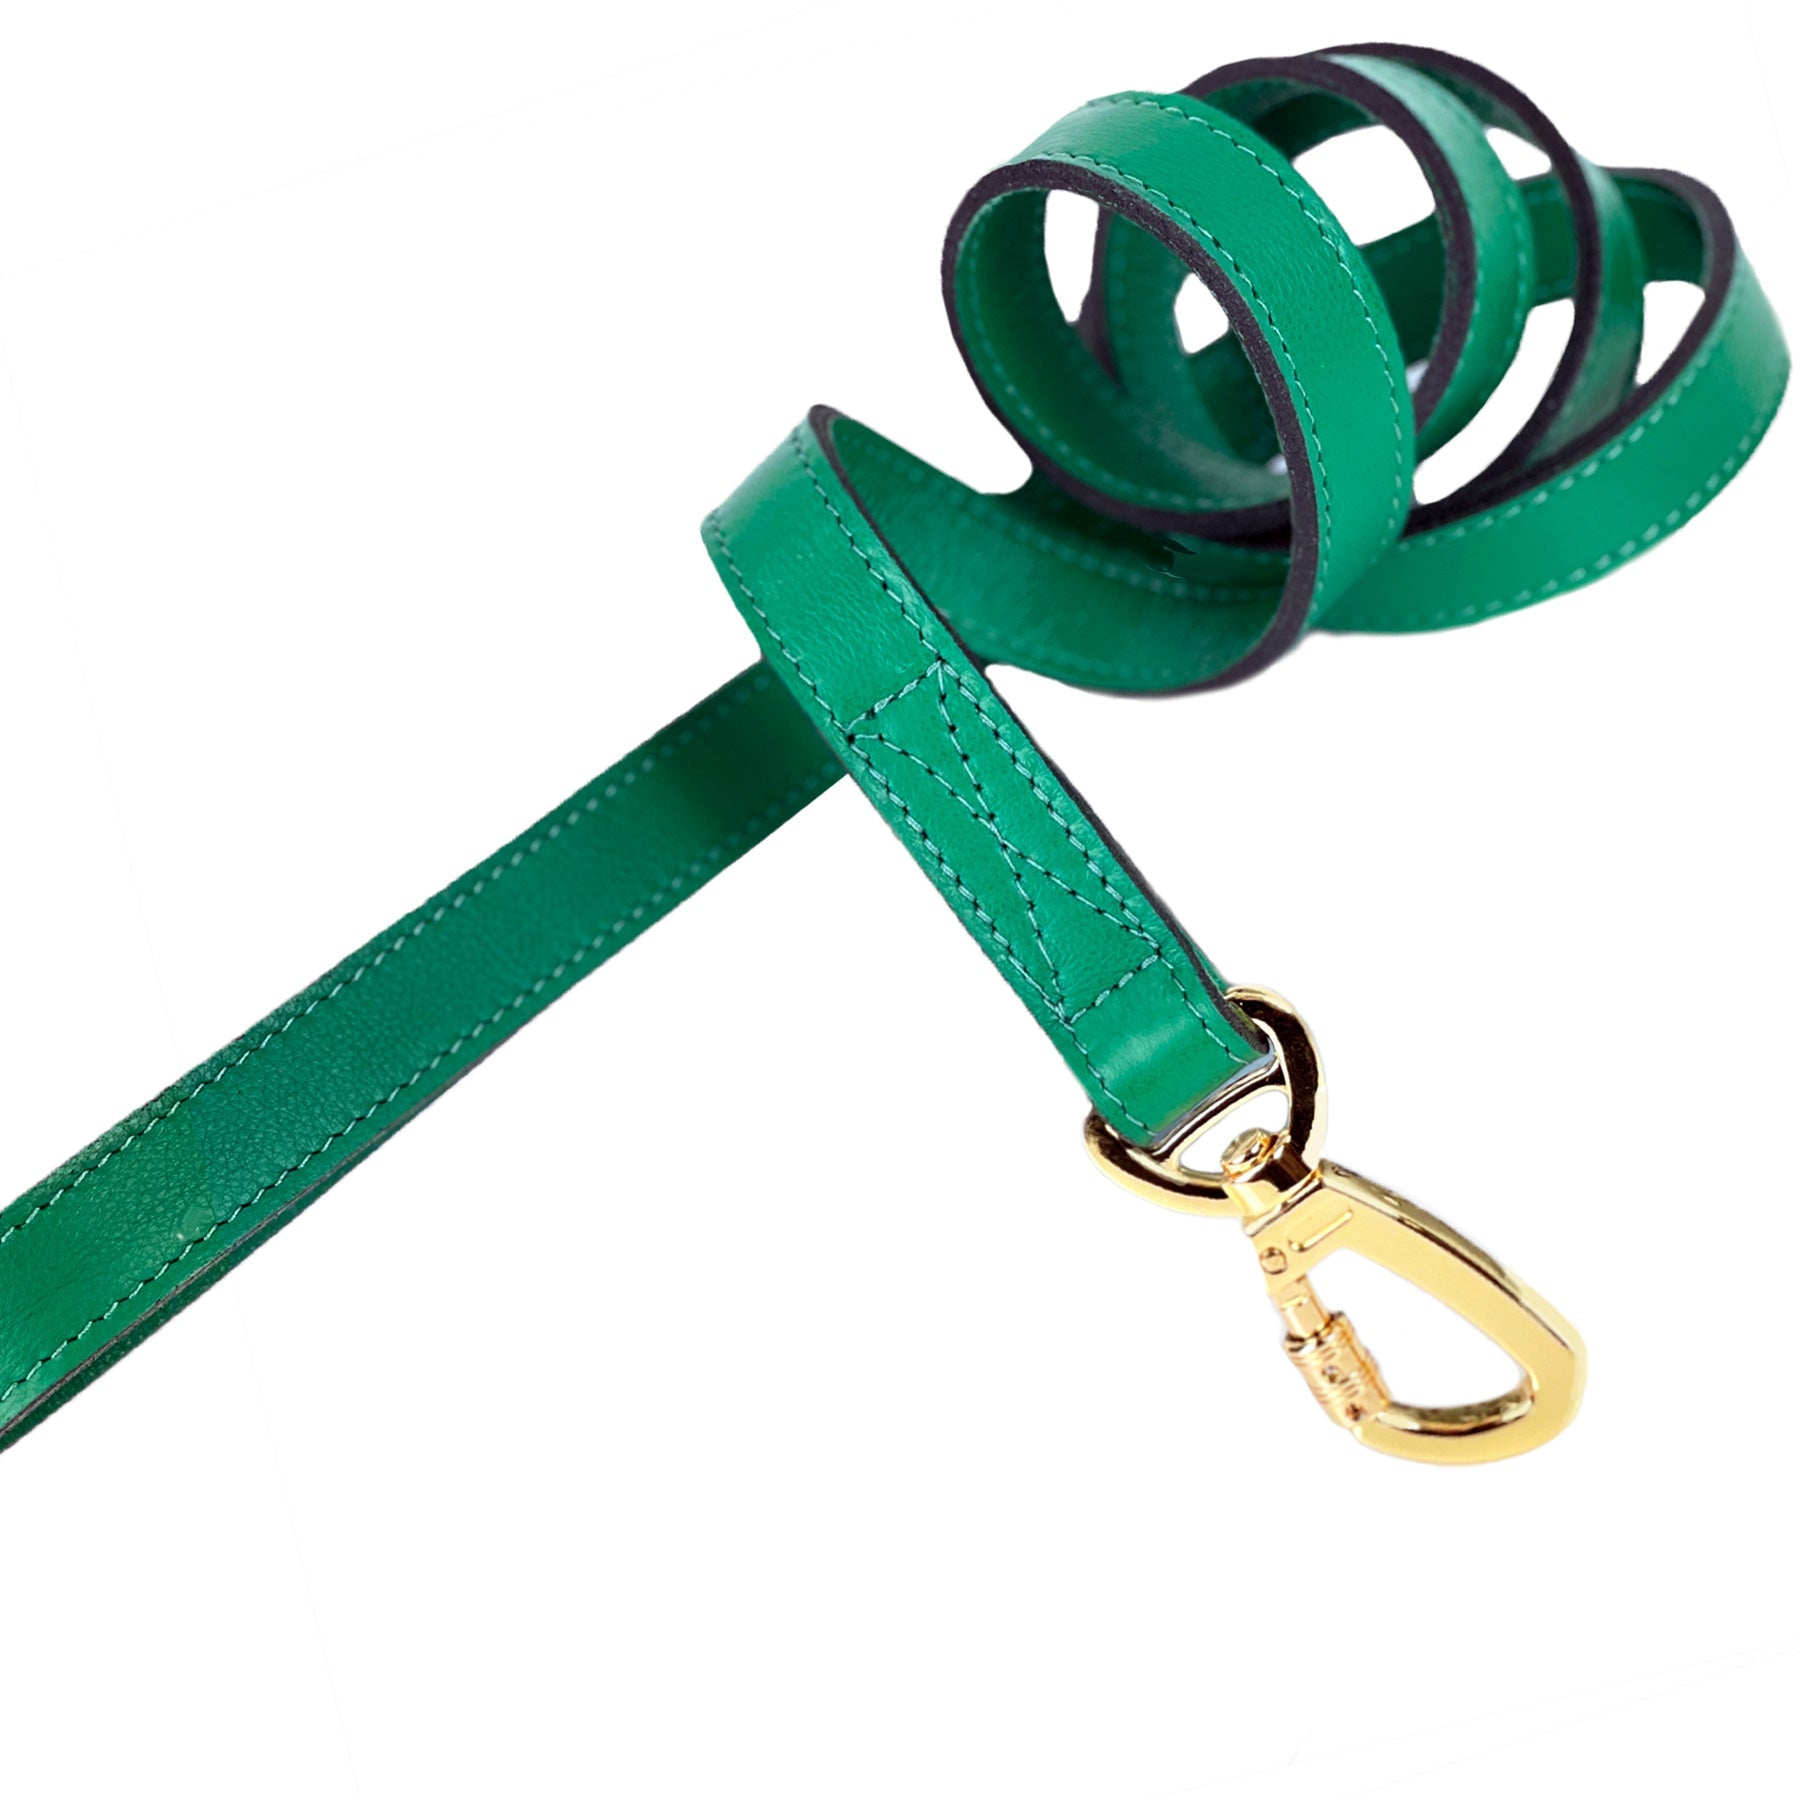 Georgia Rose Dog Leash in Emerald Green & Gold